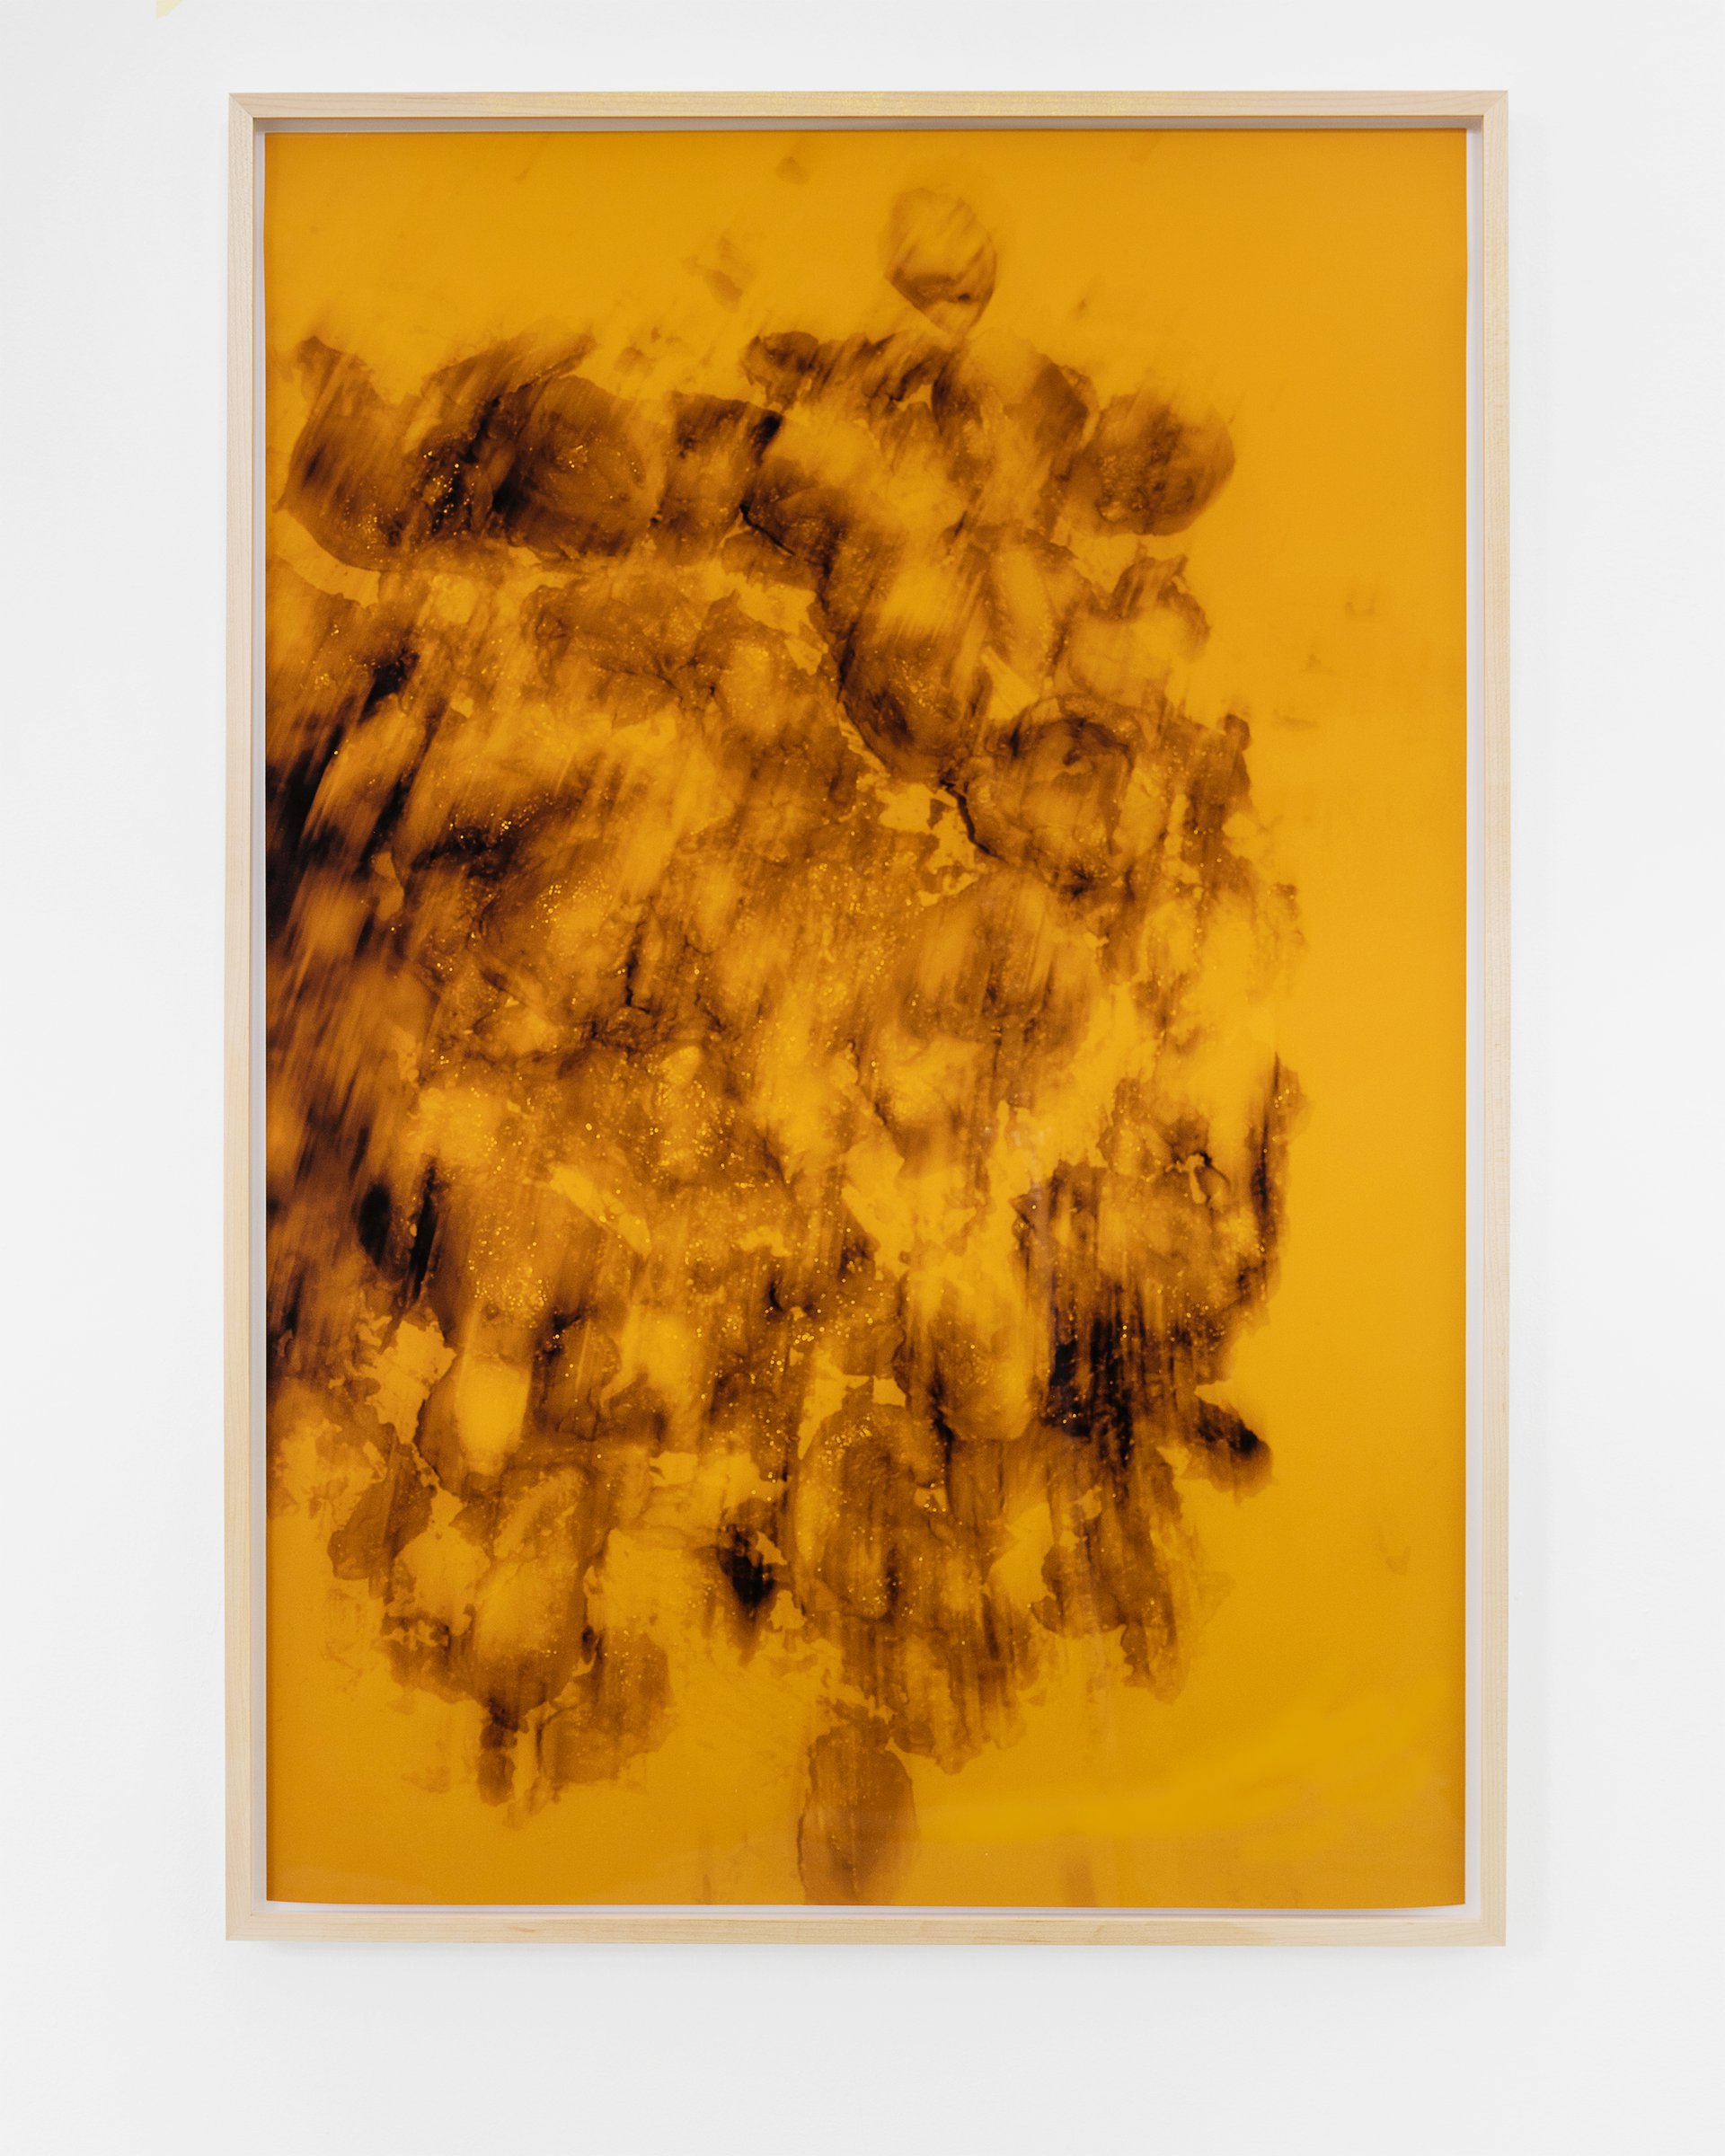 Lisa HolzerGuts, 2019Pigment print on cotton paper, acrylic metallic paint on wood110.3 x 76 cm